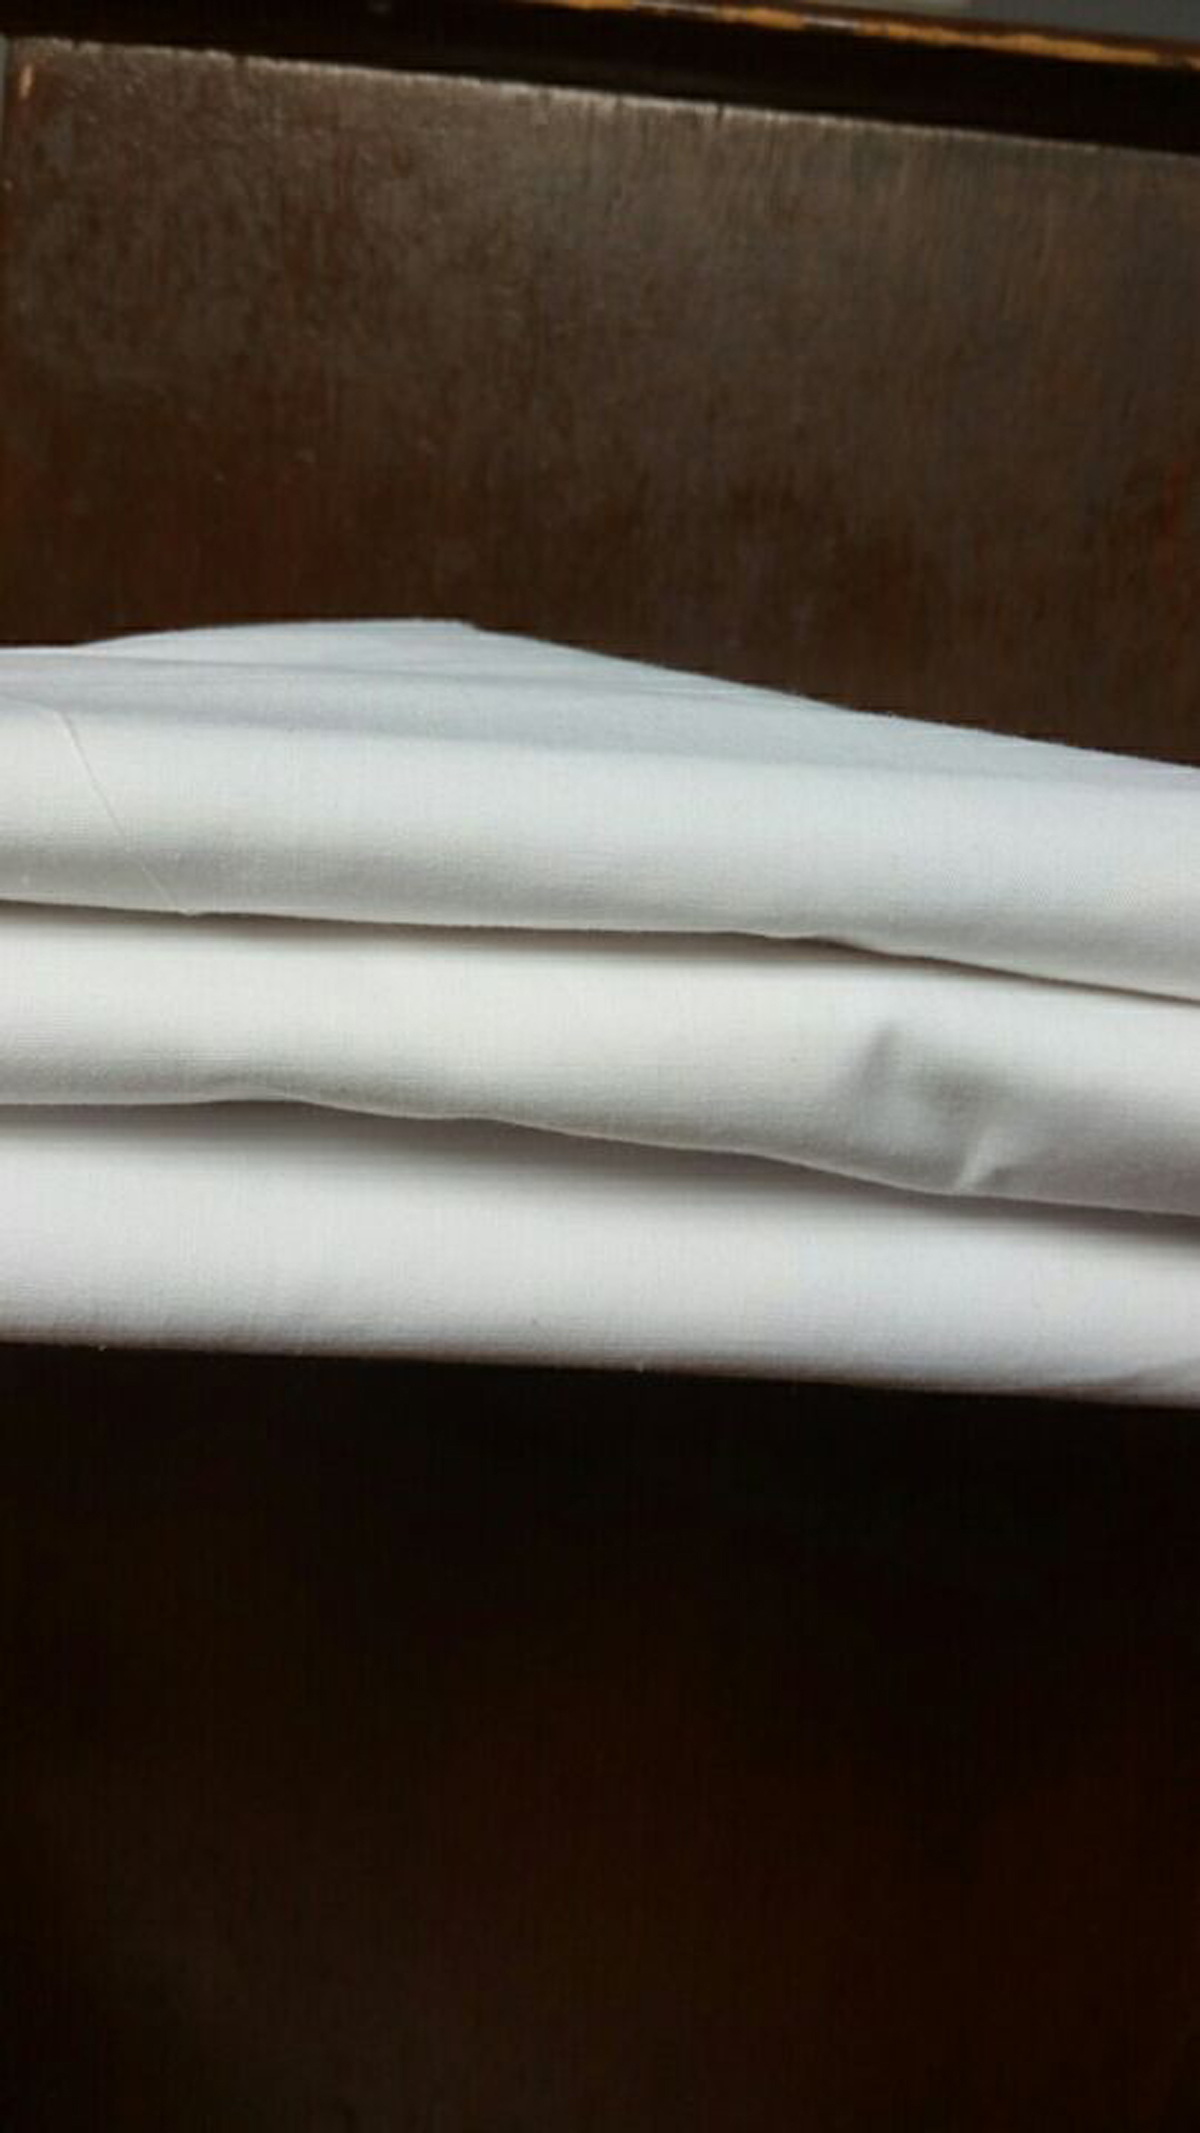 Extra width 100%cotton plain poplin woven 106g-138g white sheet fabric